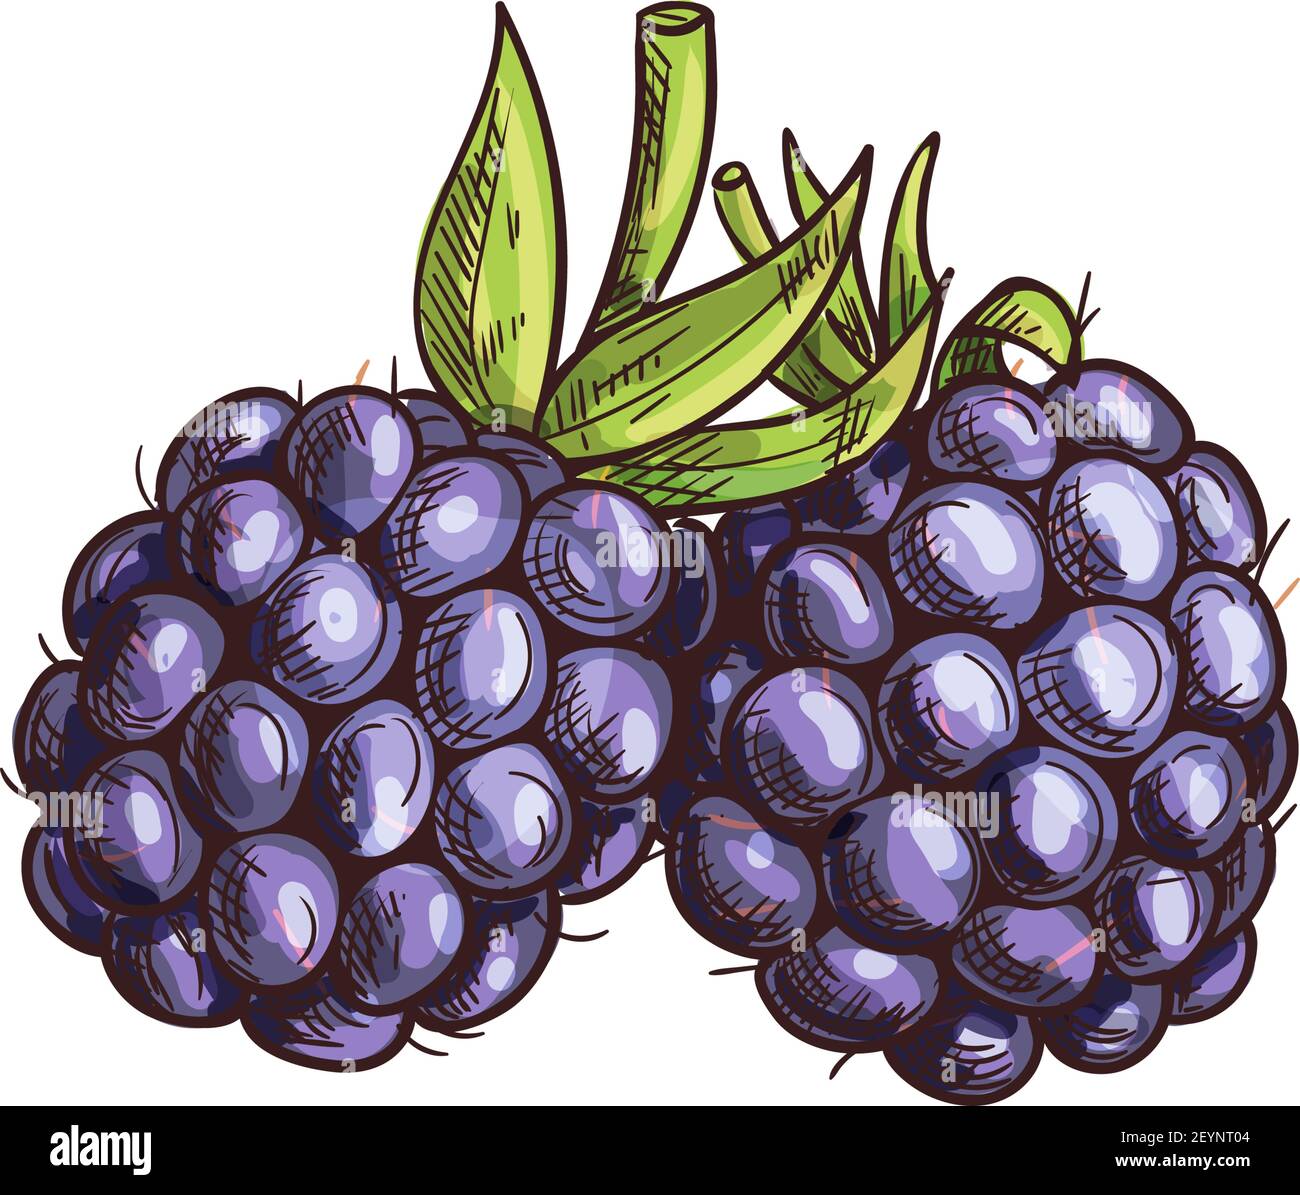 https://c8.alamy.com/comp/2EYNT04/garden-bramble-berry-isolated-summer-fruit-sketch-vector-blackberry-food-forest-berries-2EYNT04.jpg